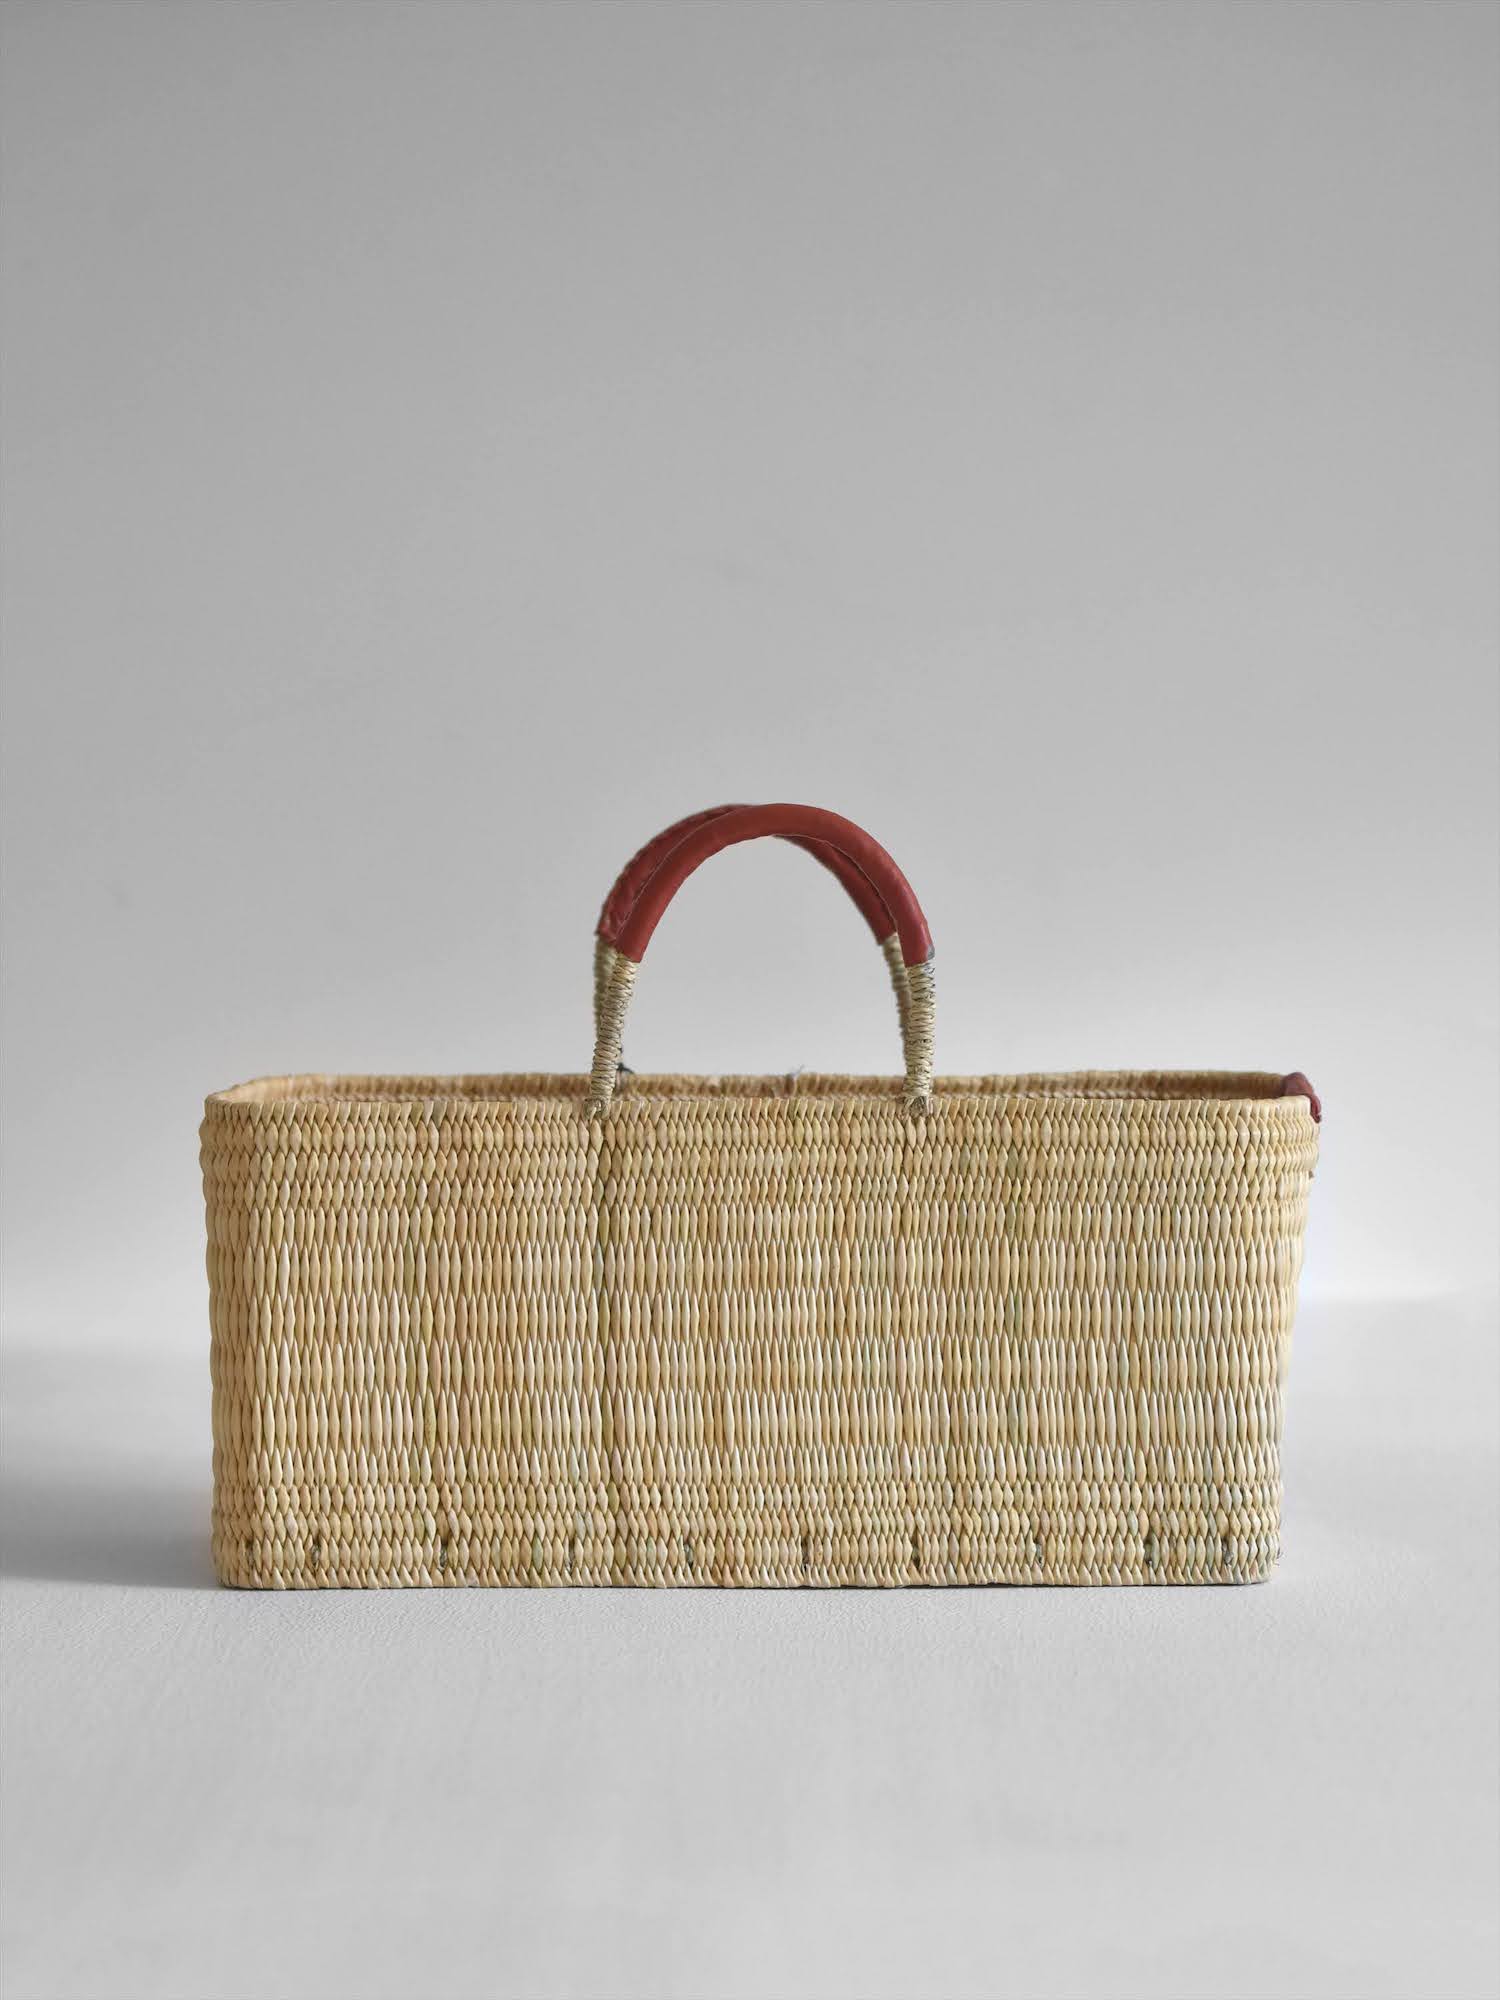 Basket / pand catalogue